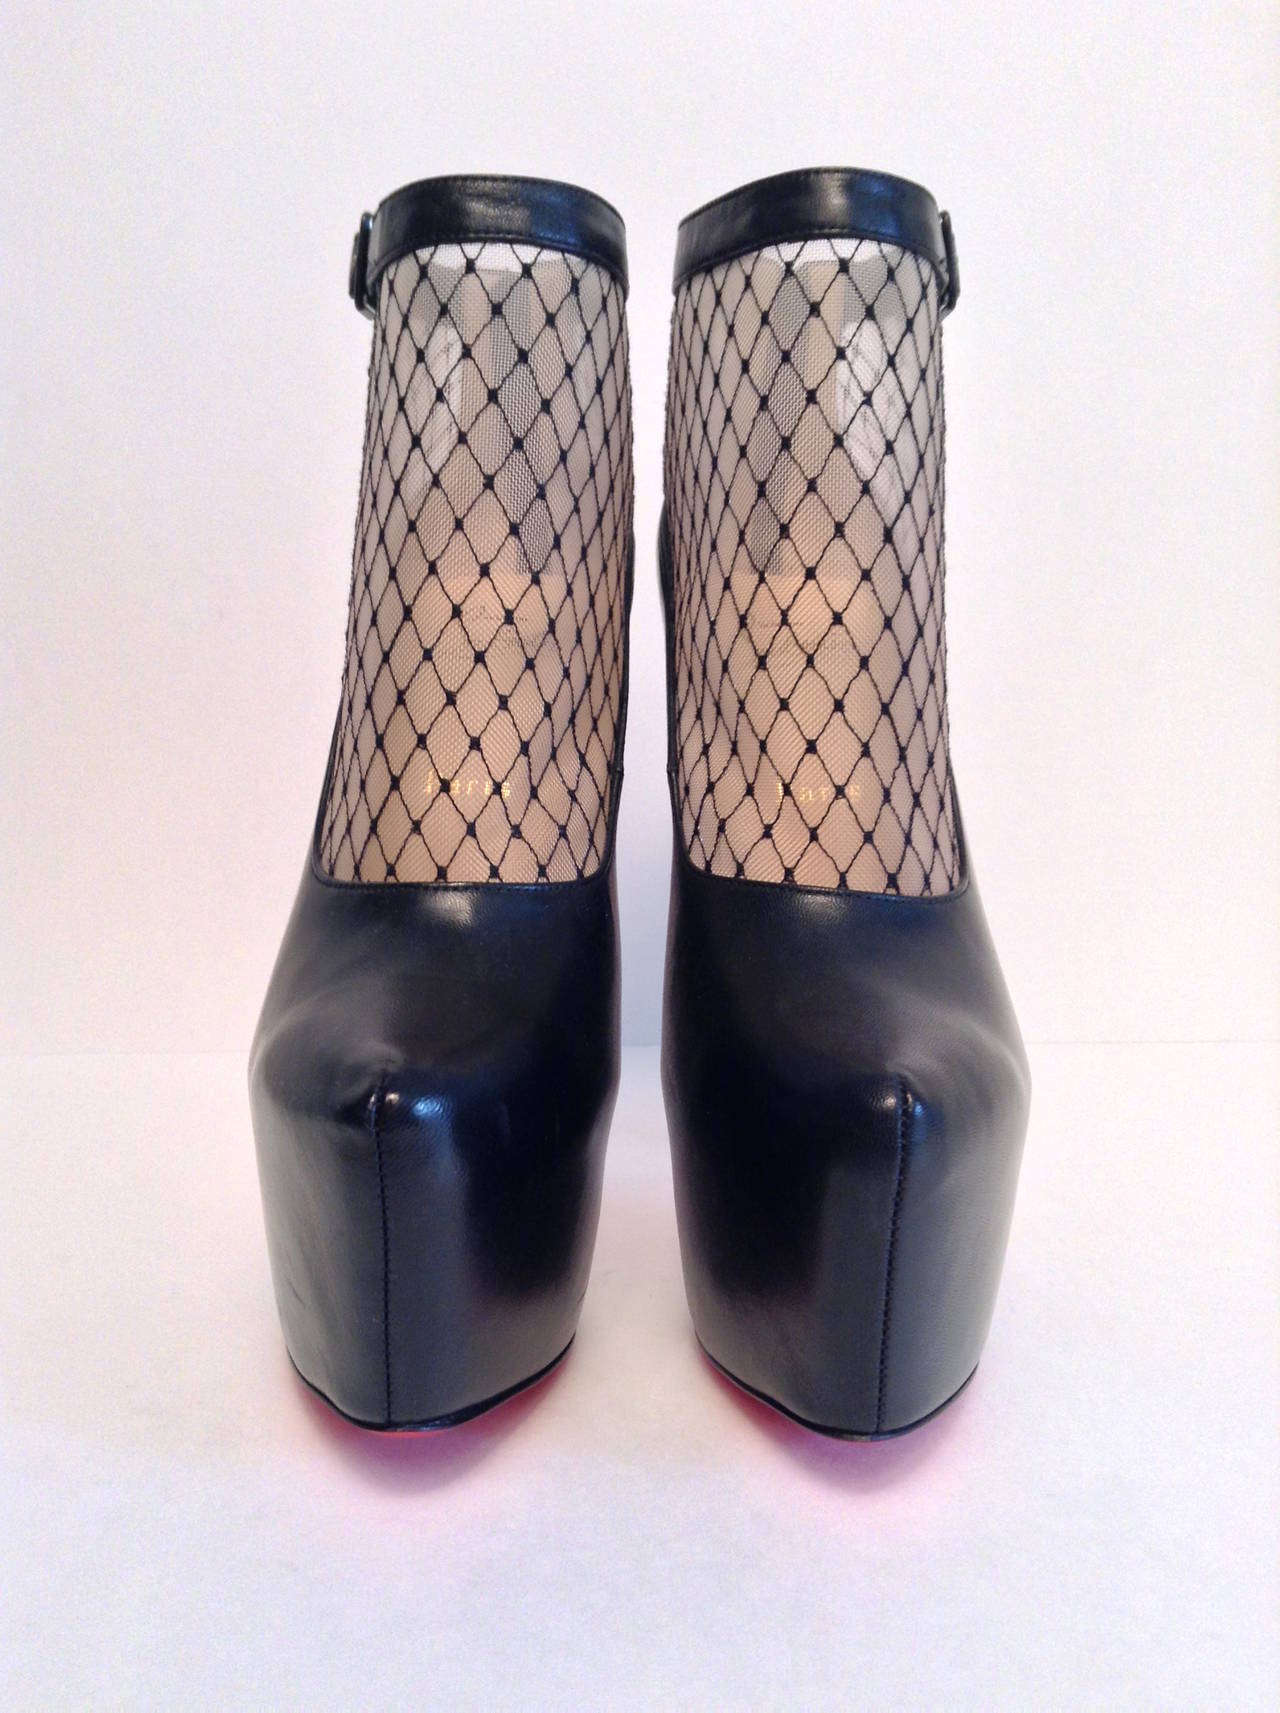 Christian Louboutin Resillissima Platform Ankle Boots Unworn Size 36 1